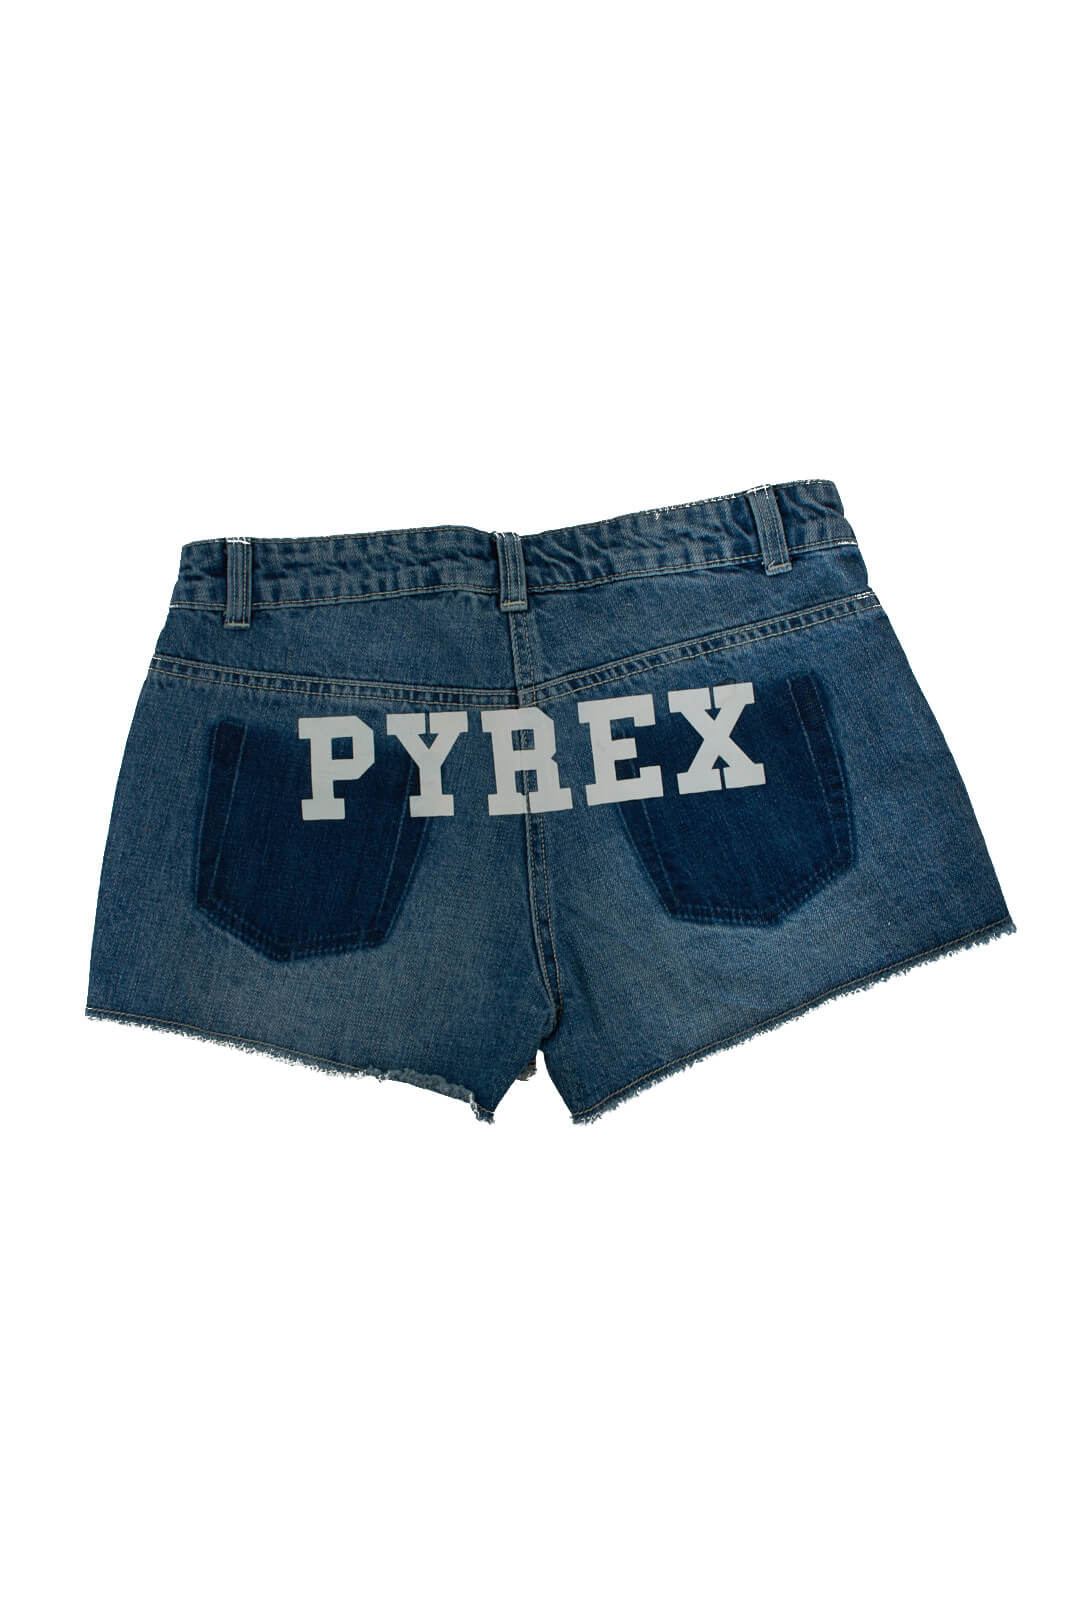 Pyrex short ragazza in jeans